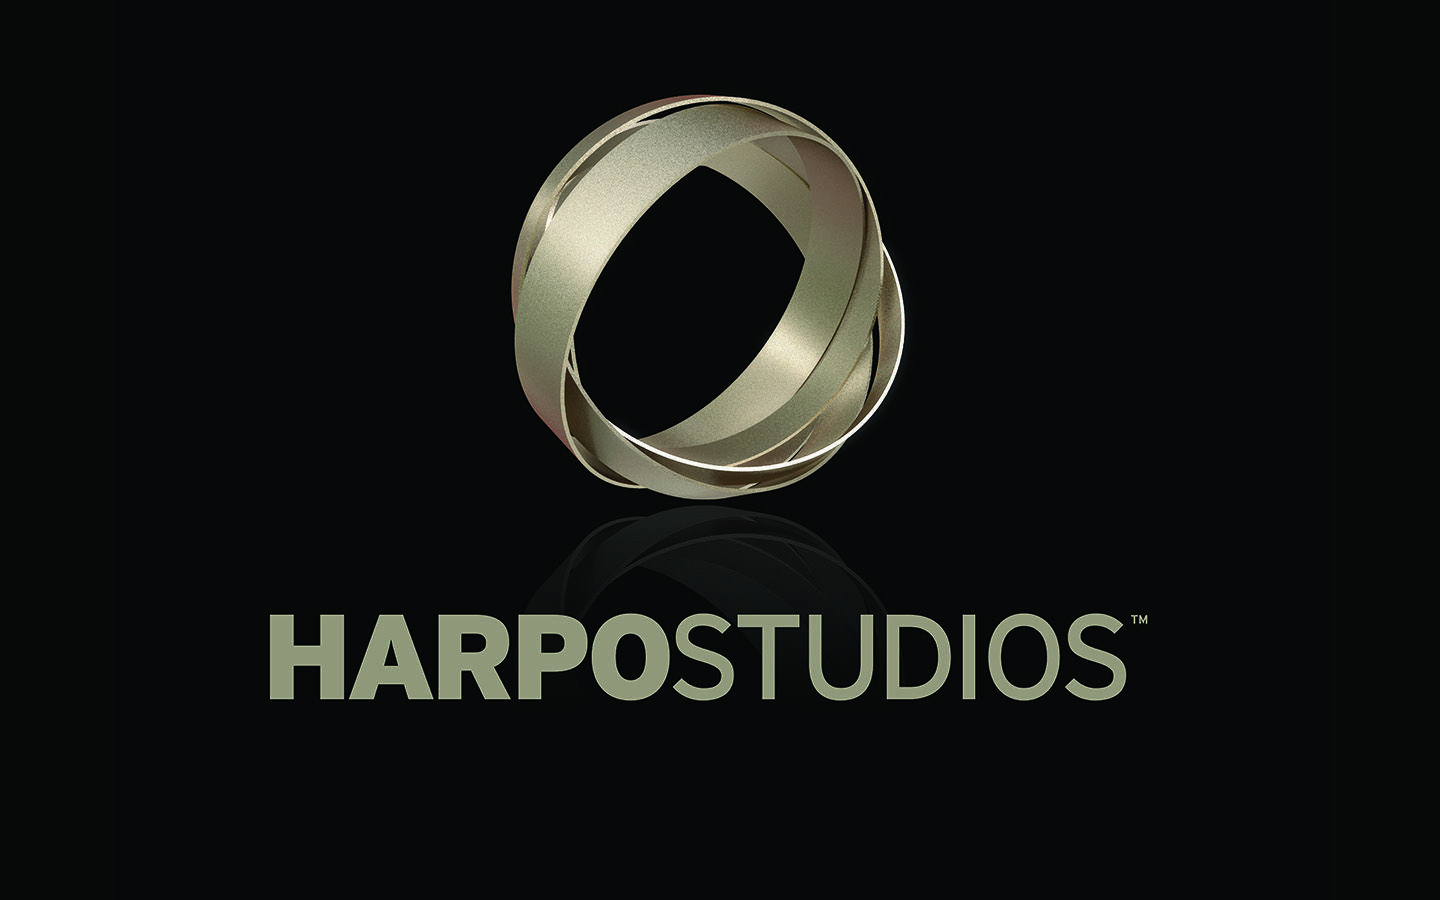 Harpo Logo - Harpo Studios | Bruce Mau Design